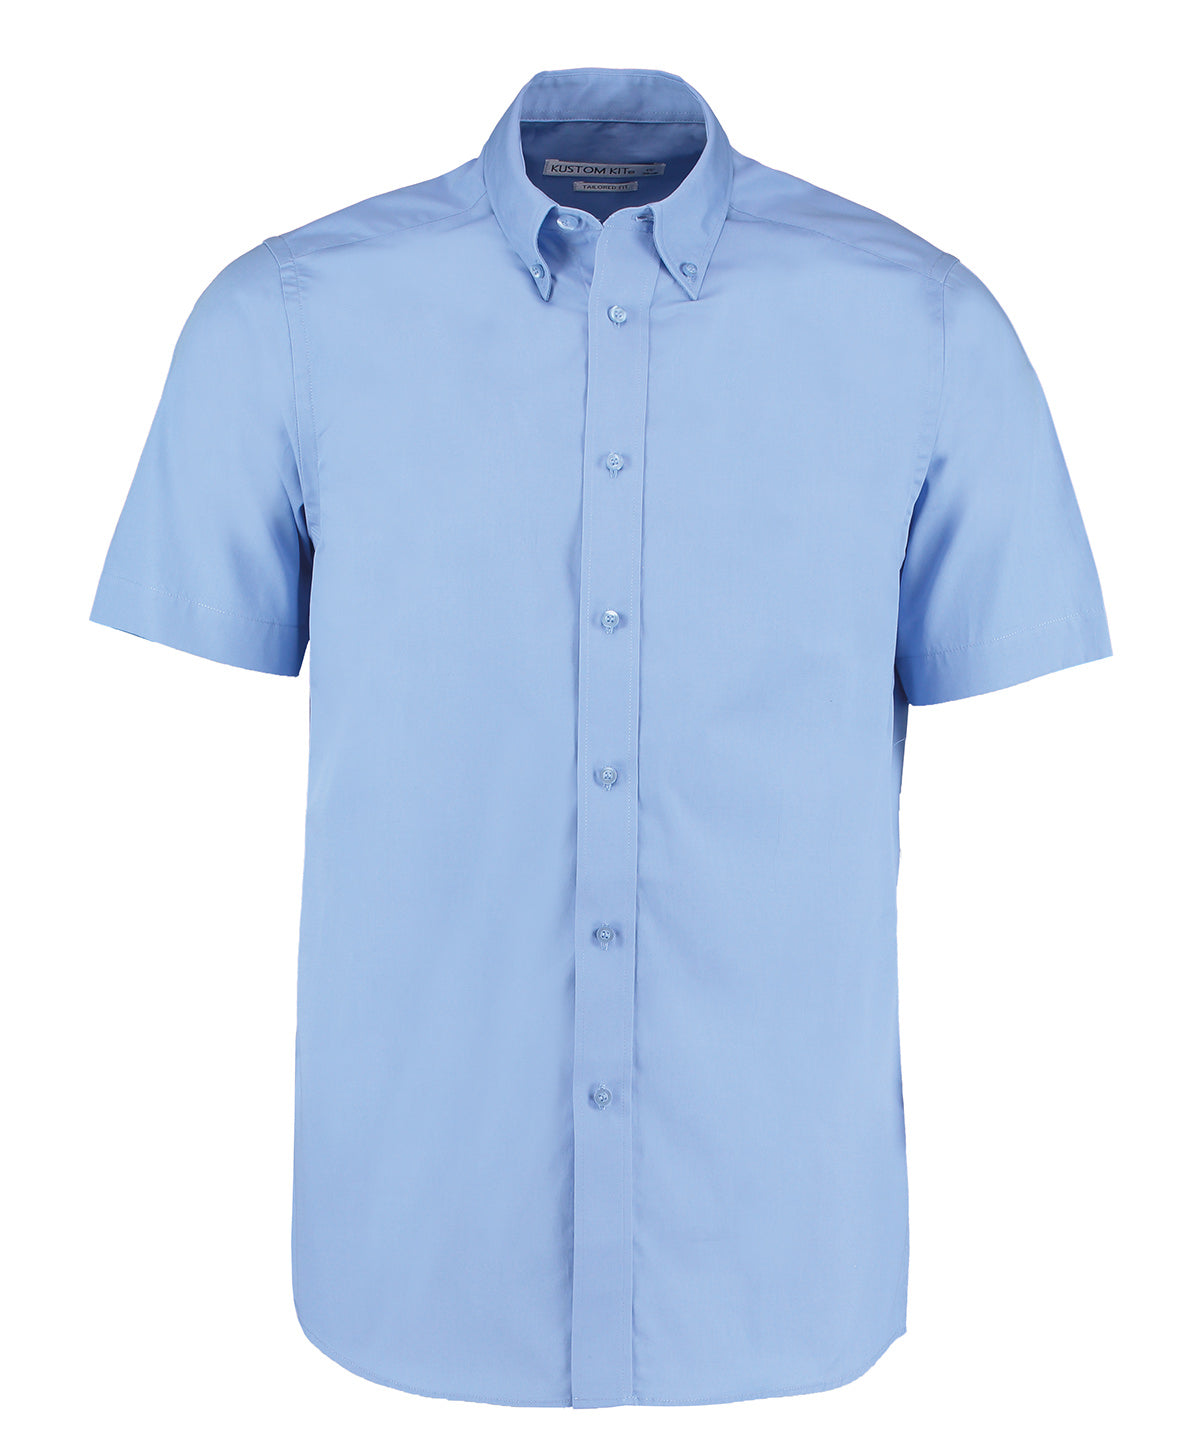 Bolir - City Business Shirt Short Sleeve